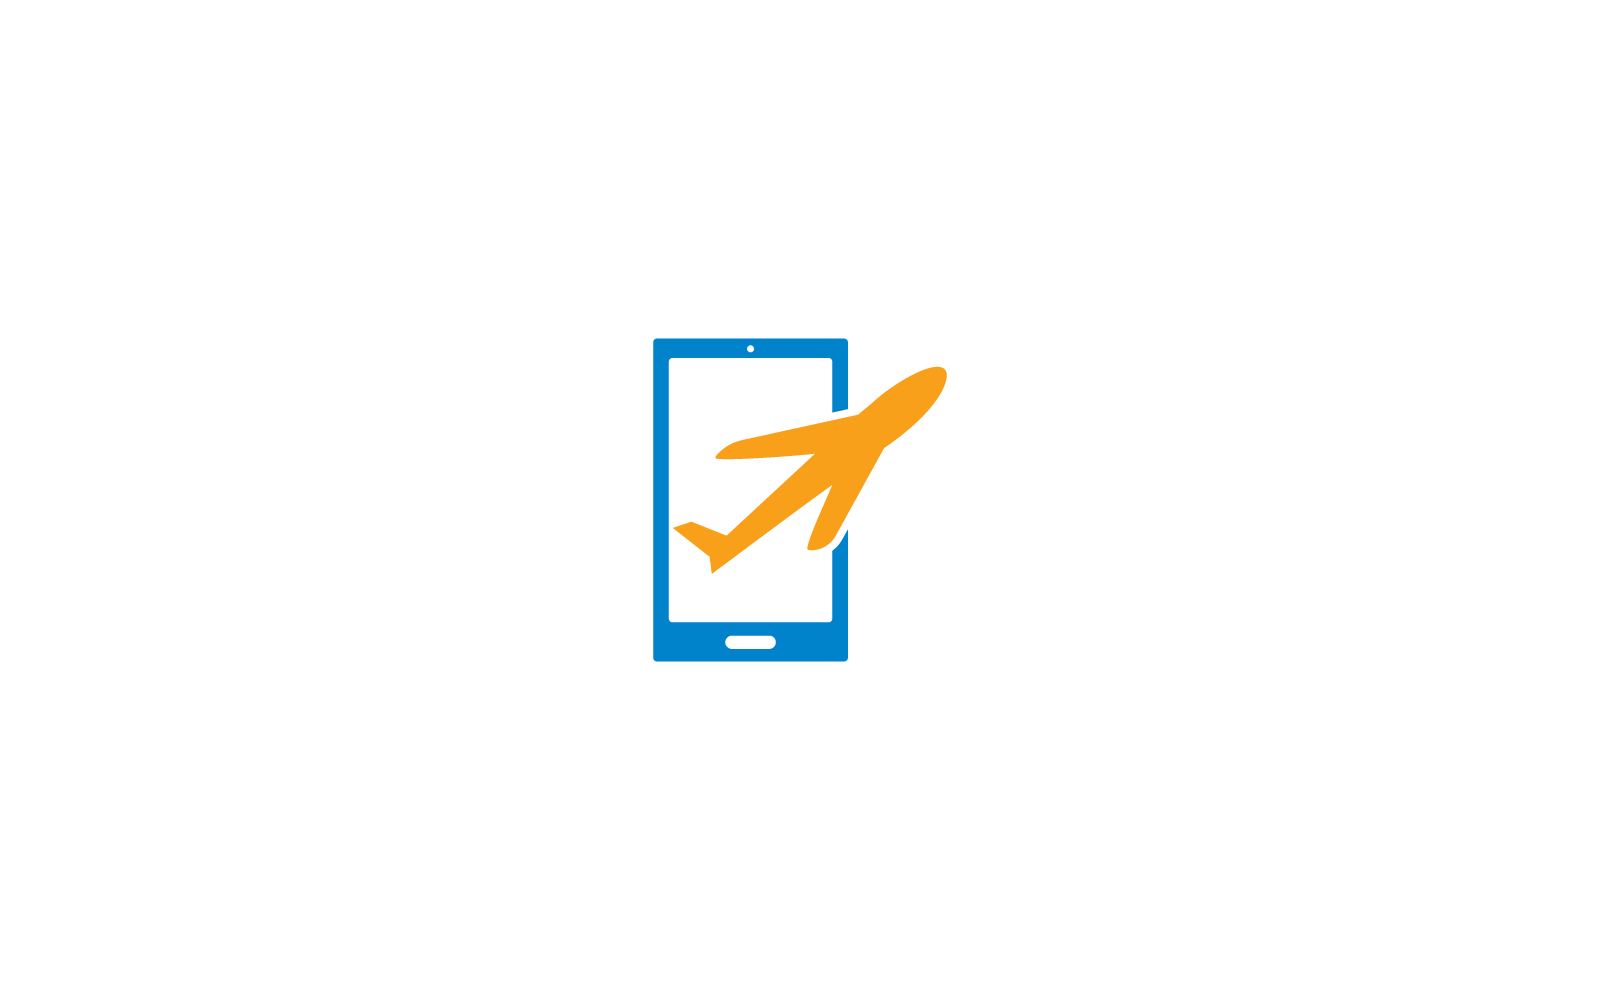 Plane Travel logo vector icon flat design